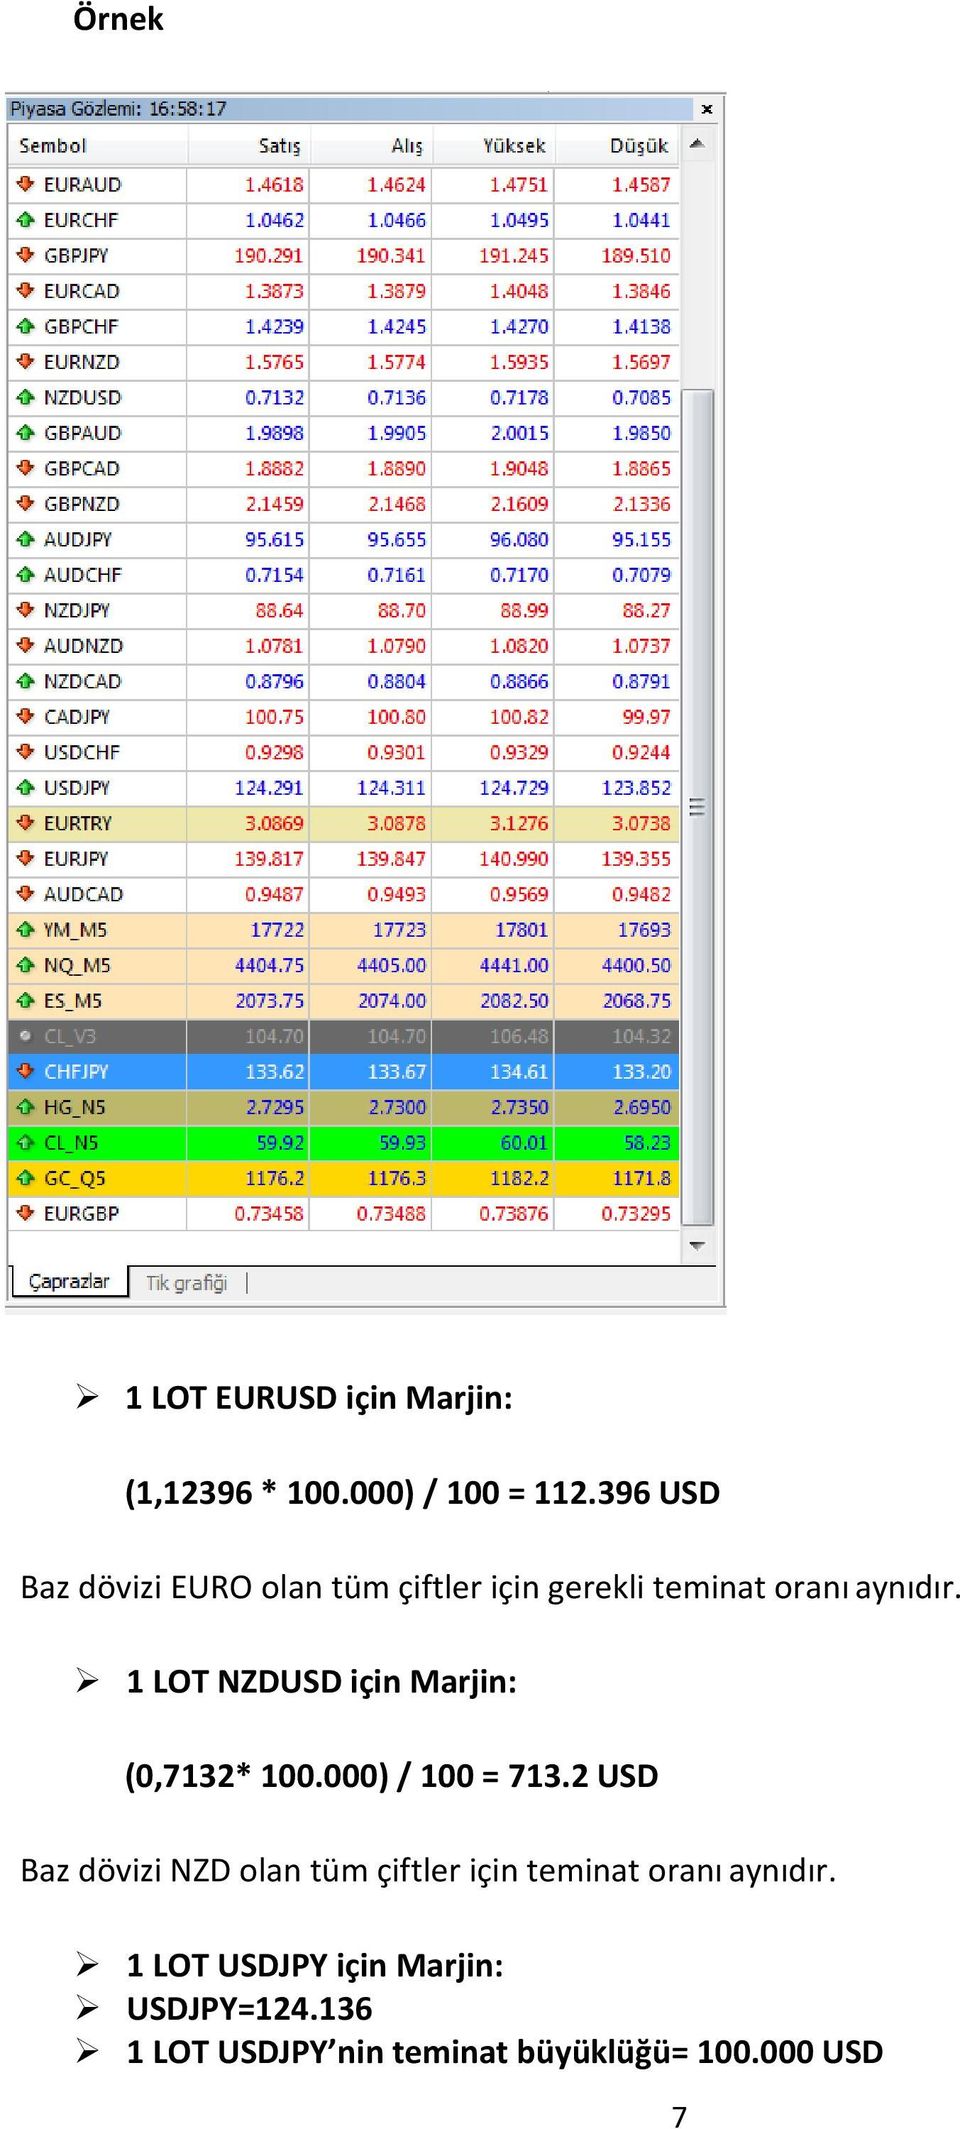 1 LOT NZDUSD için Marjin: (0,7132* 100.000) / 100 = 713.